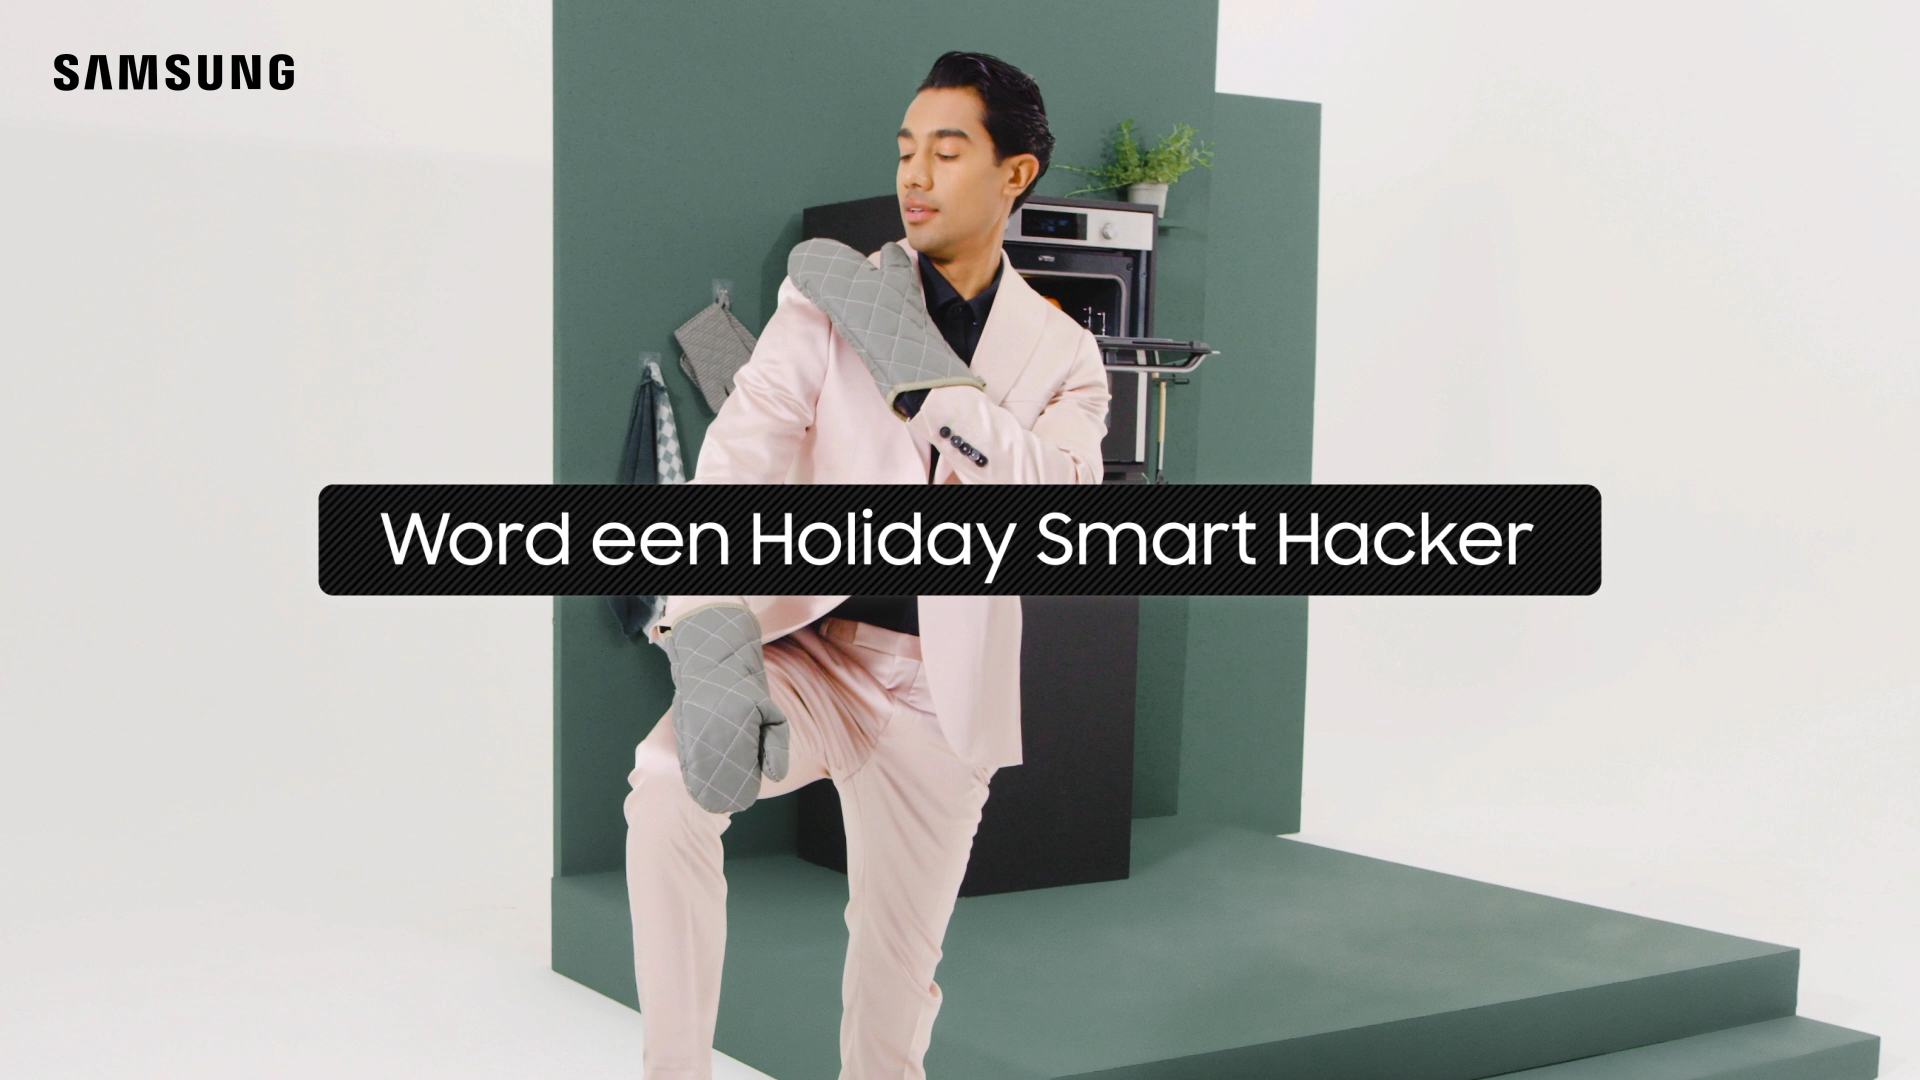 Samsung – Word een Holiday Smart Hacker